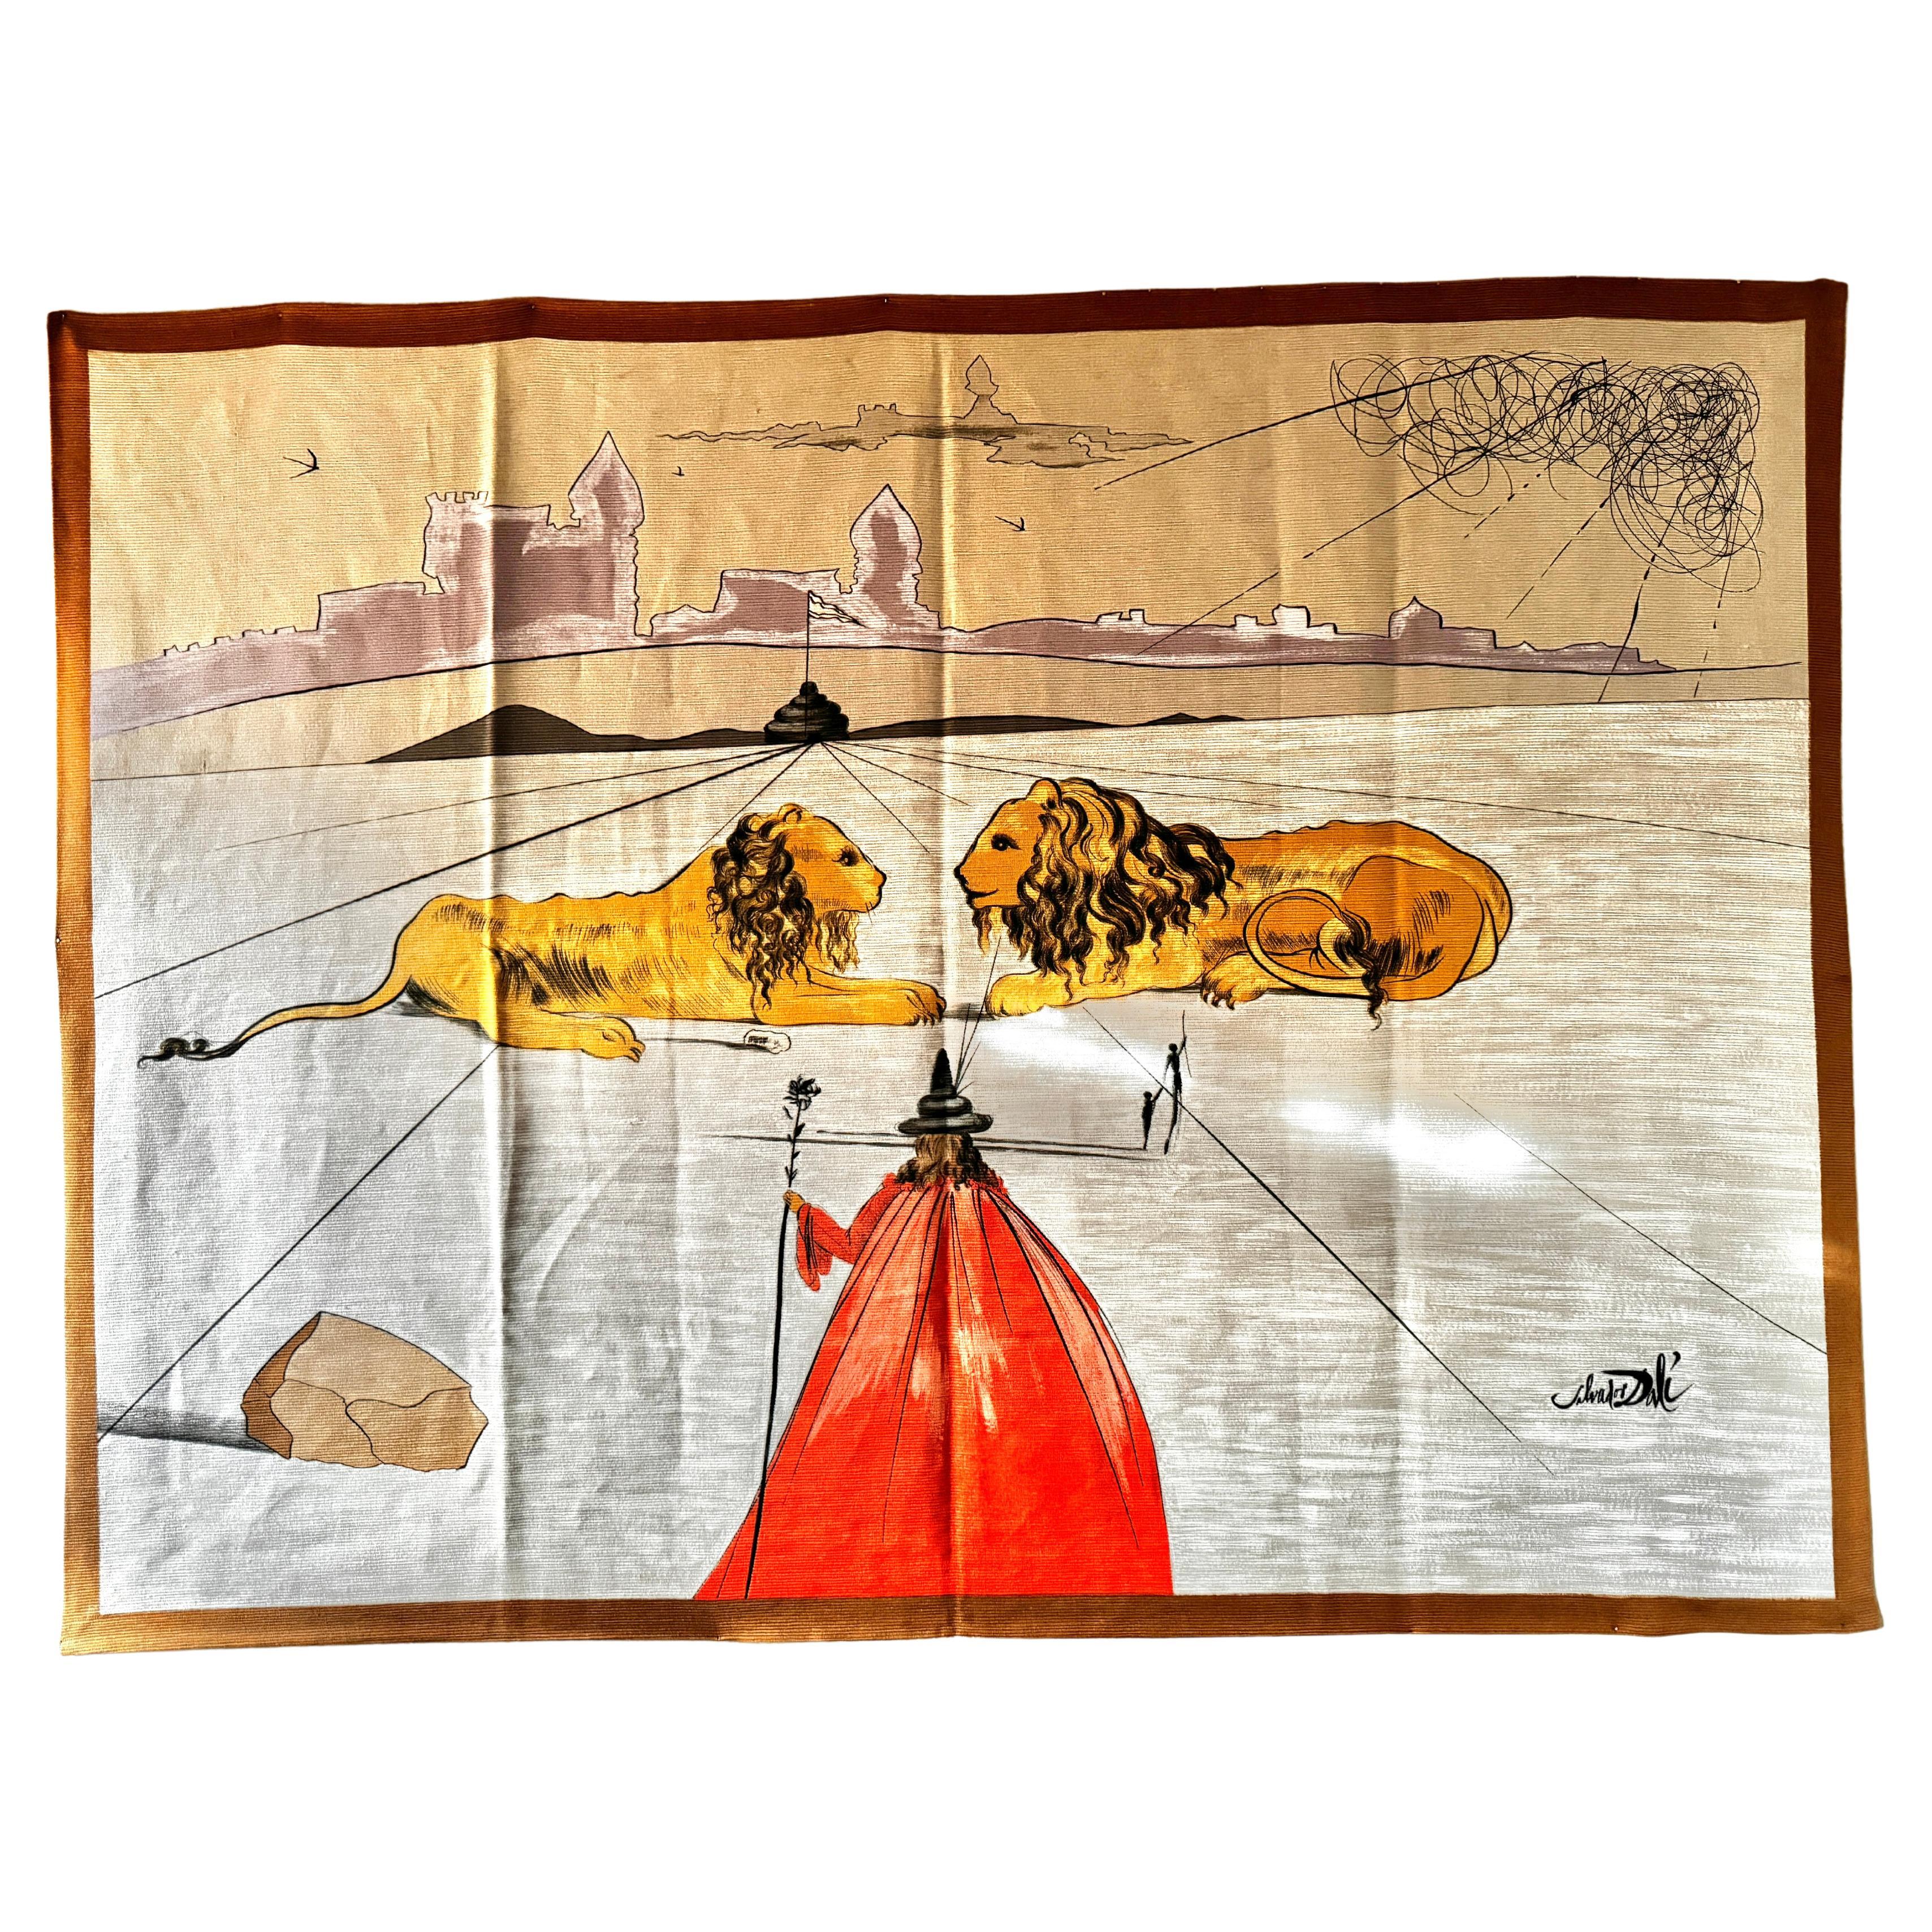 Salvador Dalí Tapestry "The Twelve Tribes of Israel" For Sale